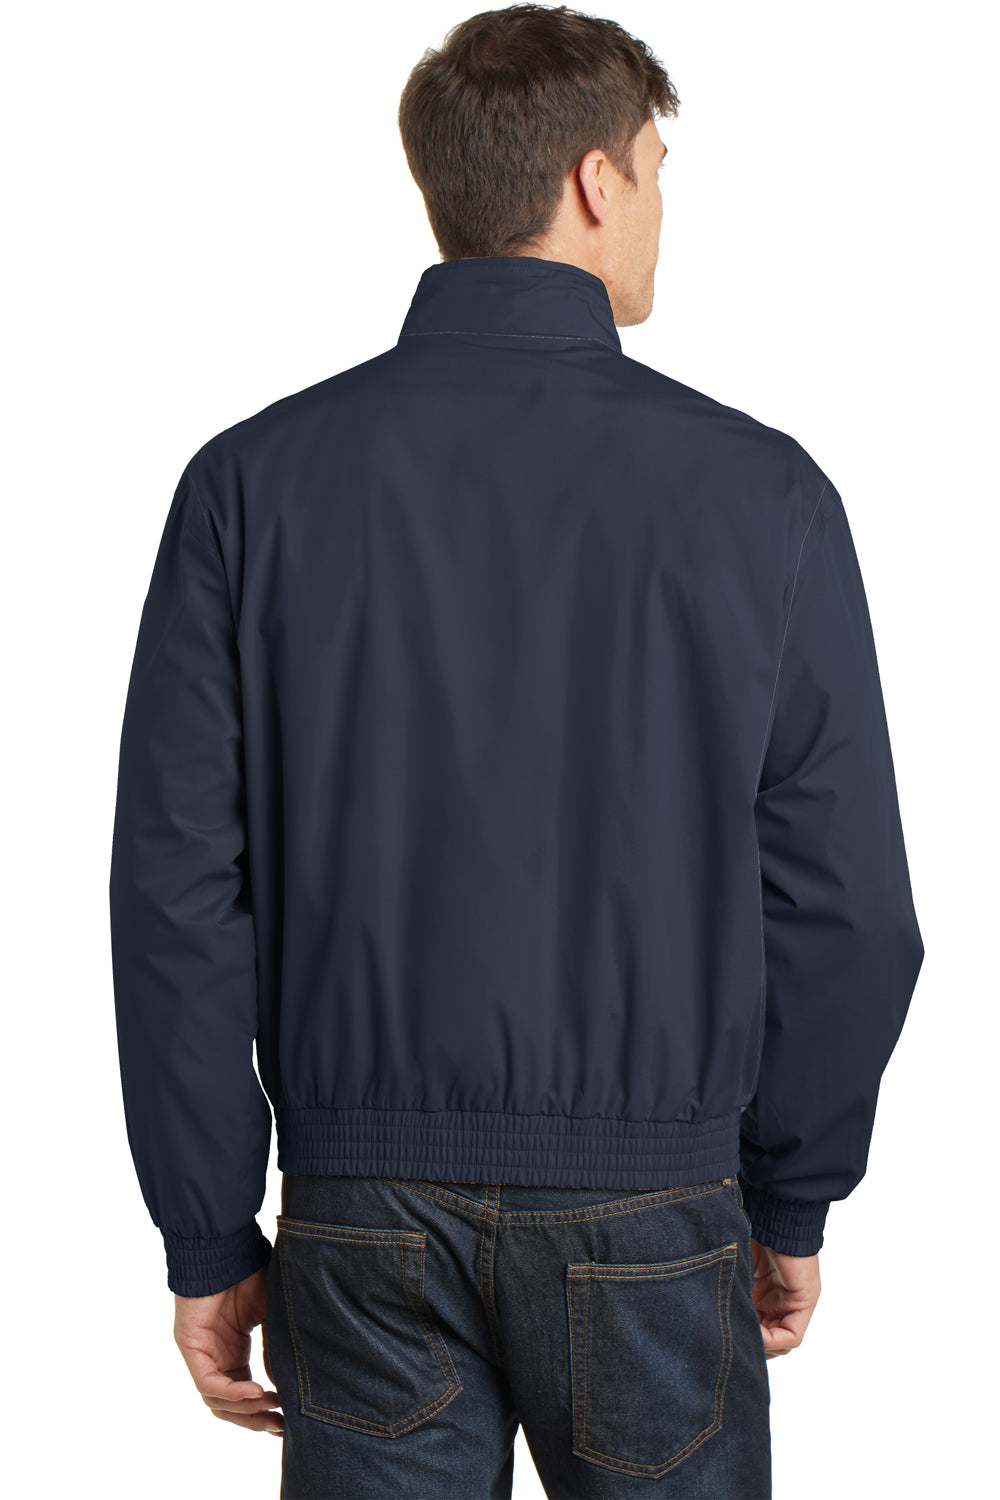 Port Authority J753 Mens Classic Poplin Wind & Water Resistant Full Zip Jacket Navy Blue Back